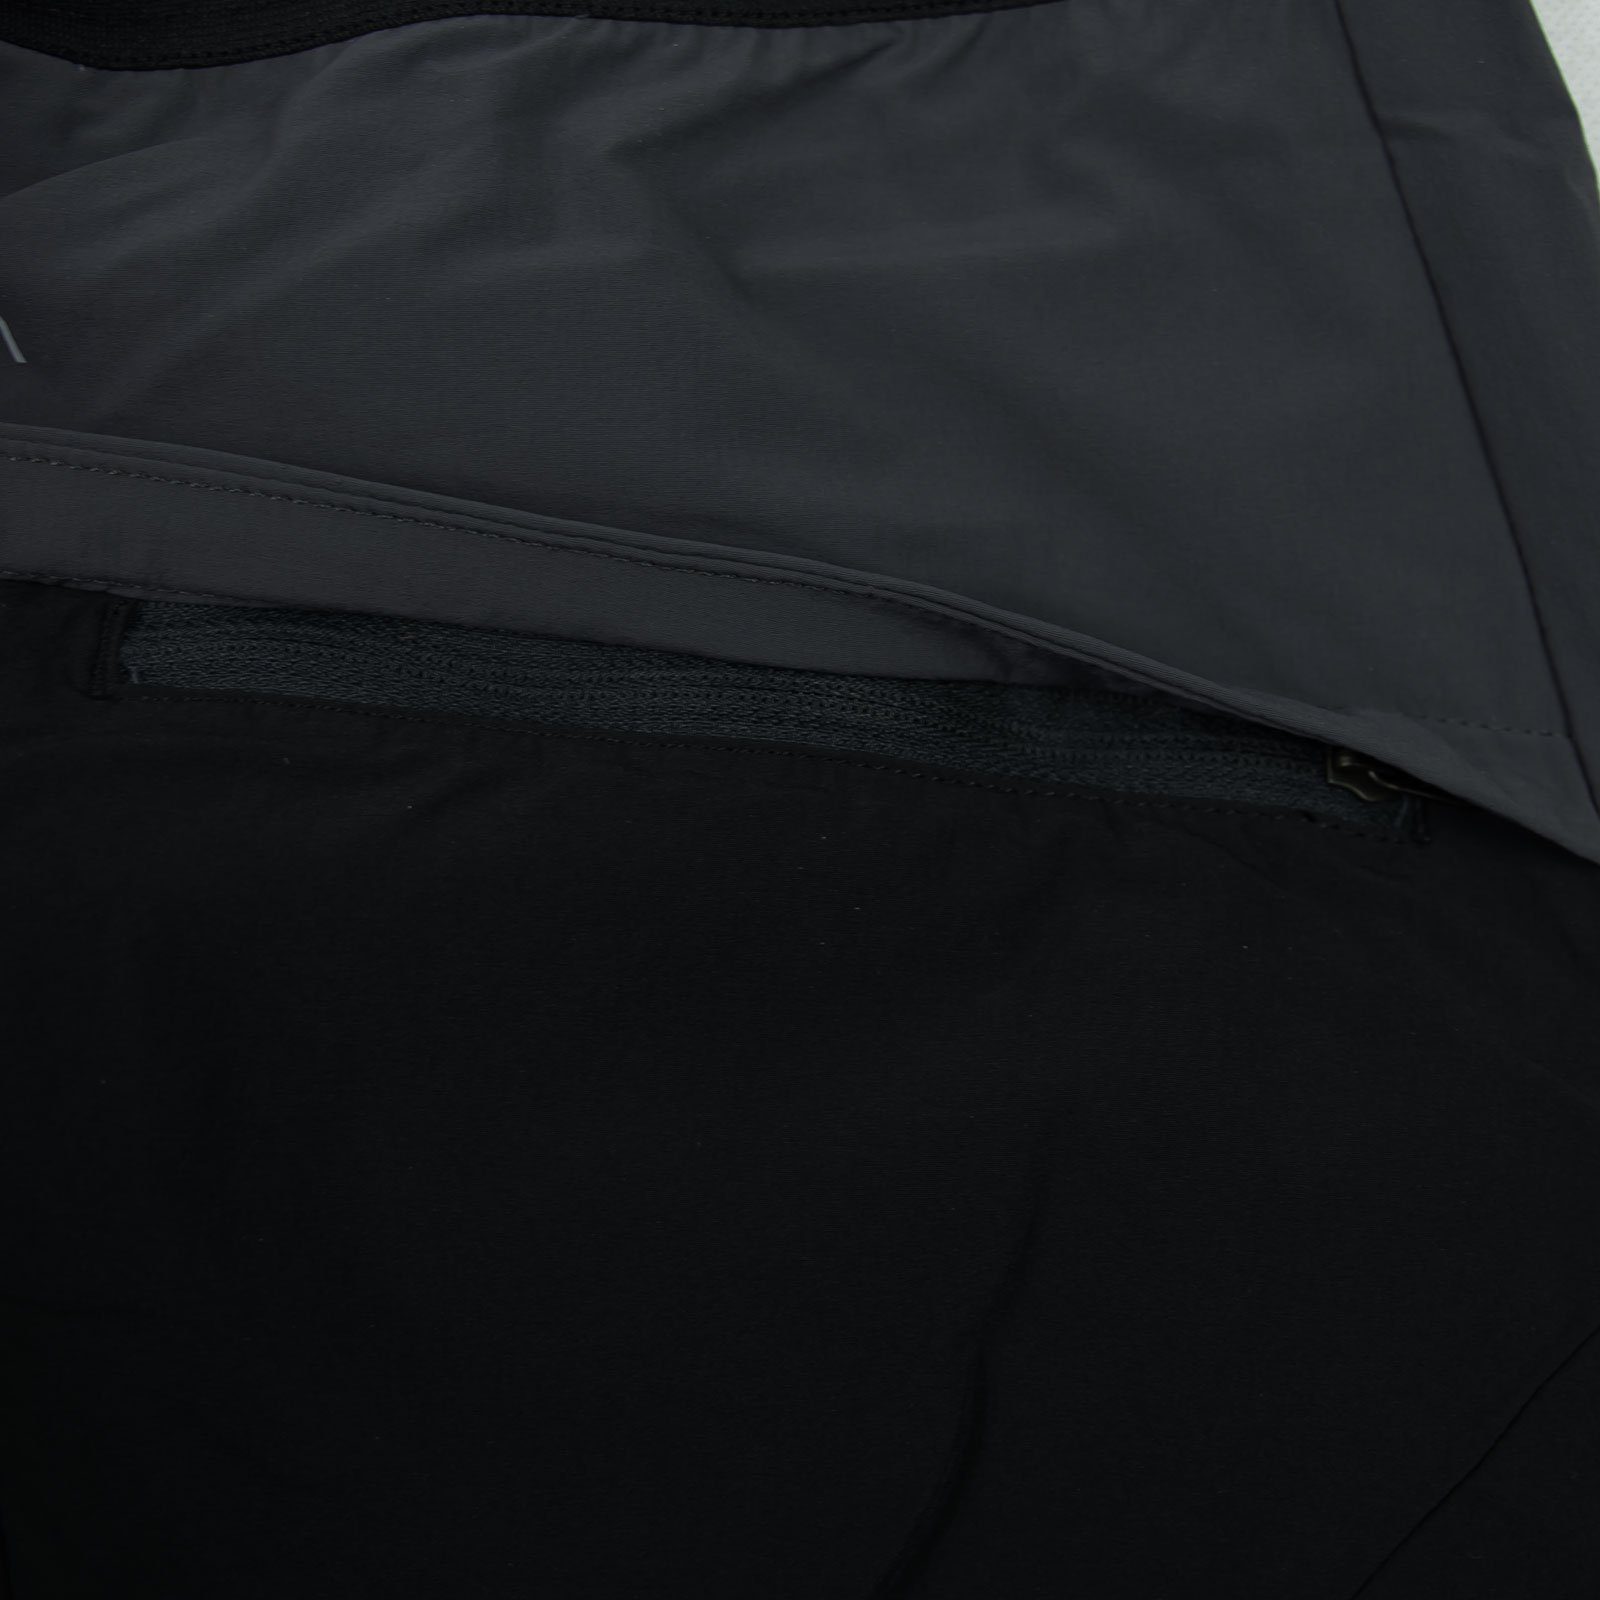 und aus black Trekkinghose Brush / leichtem, Material La Pant elastischem atmungsaktivem 999900 besonders Sportiva carbon